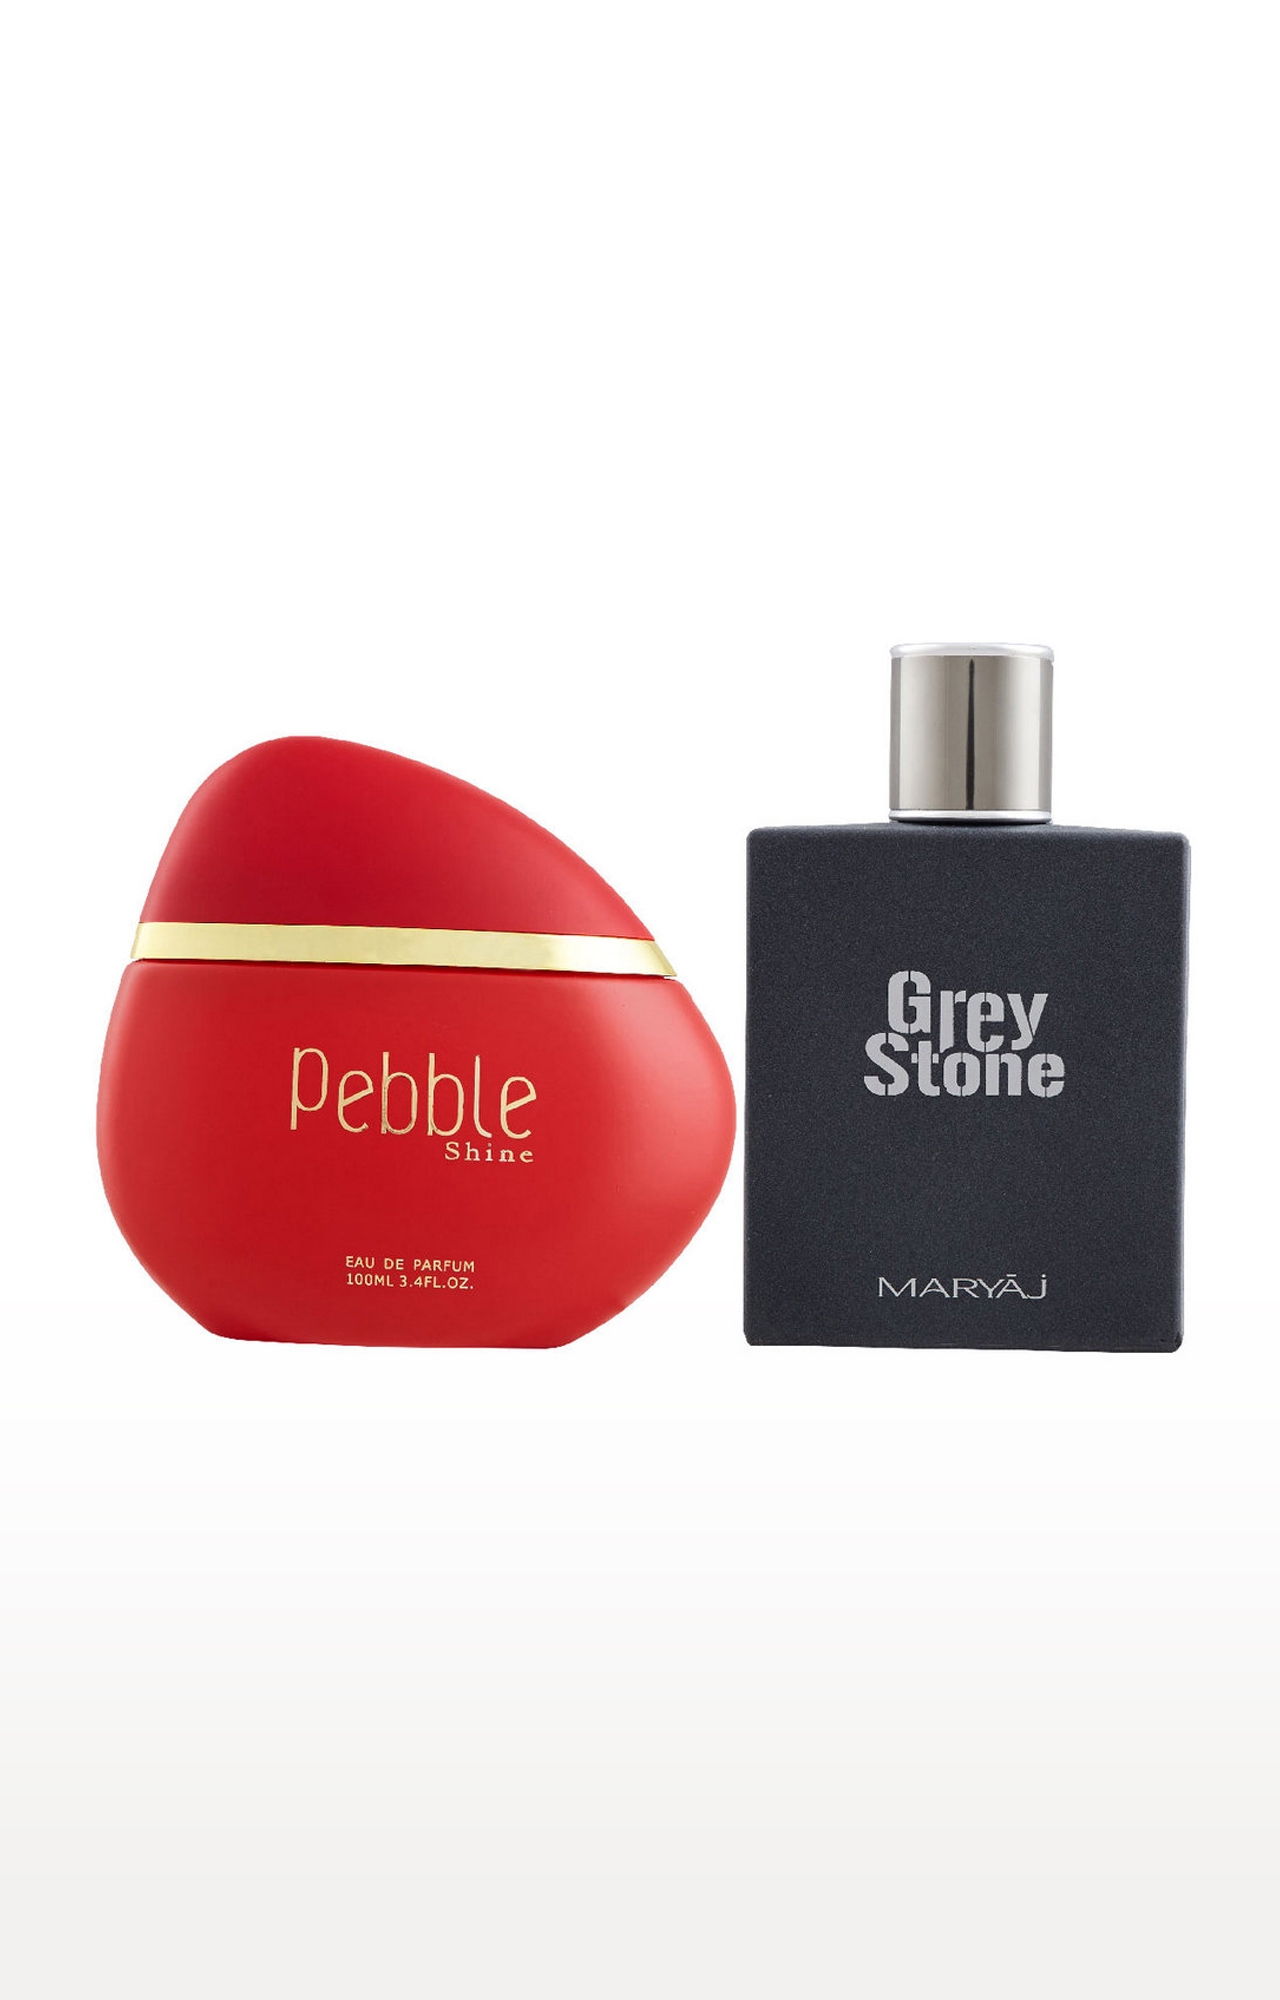 Maryaj Pebble Shine Eau De Parfum Fruity Perfume 100ml for Women and Maryaj Grey Stone Eau De Parfum Perfume 100ml for Men